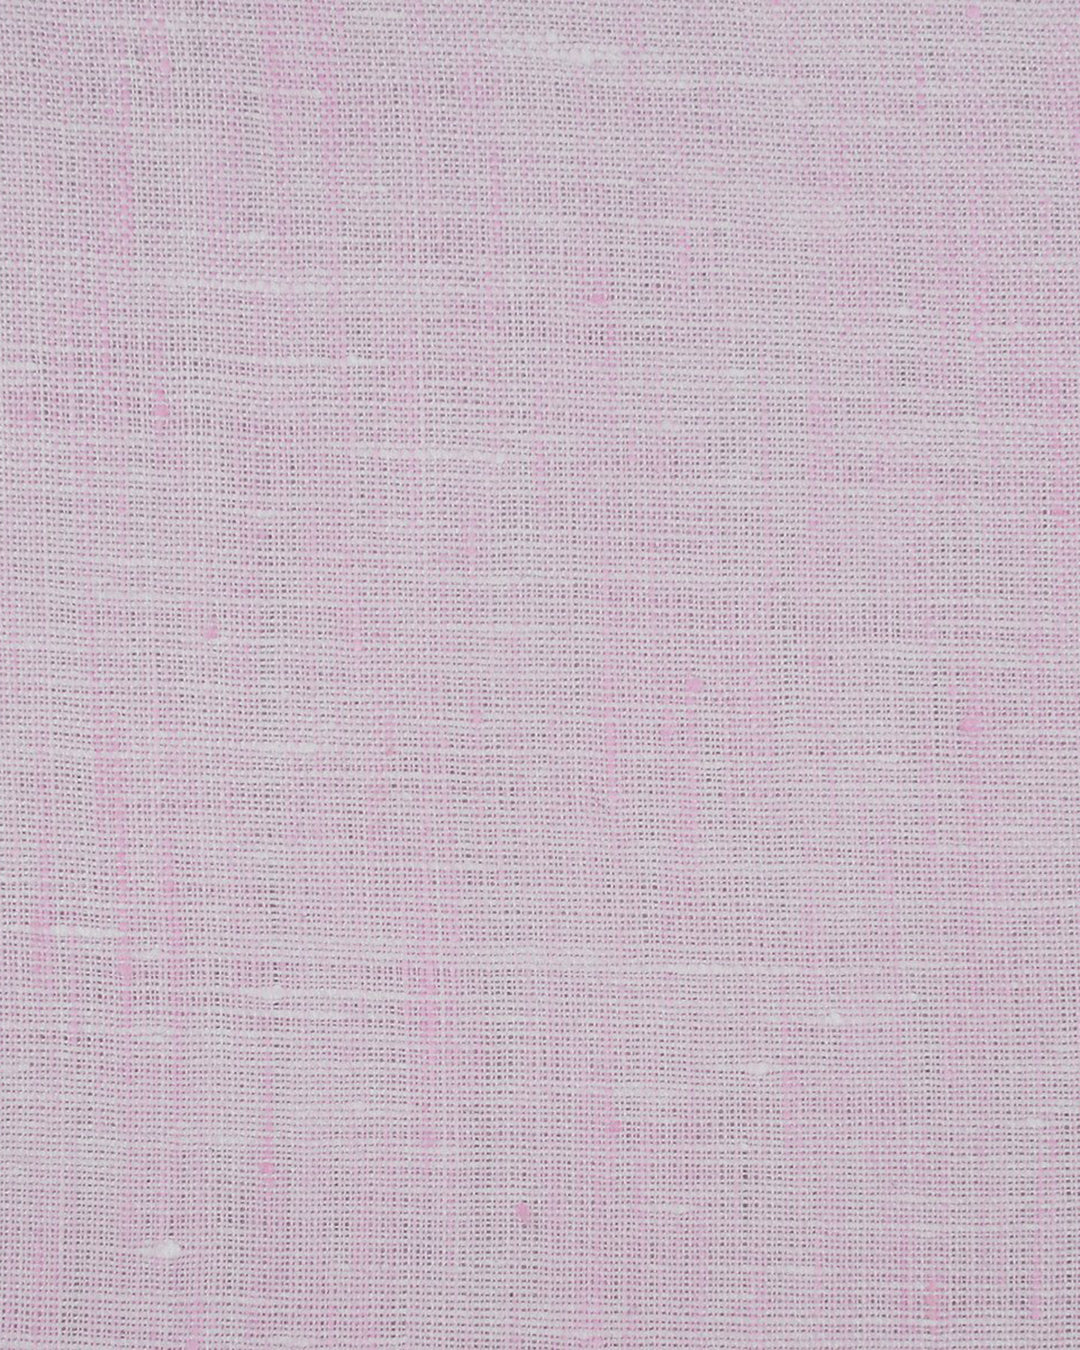 Linen: Pale Pink Chambray